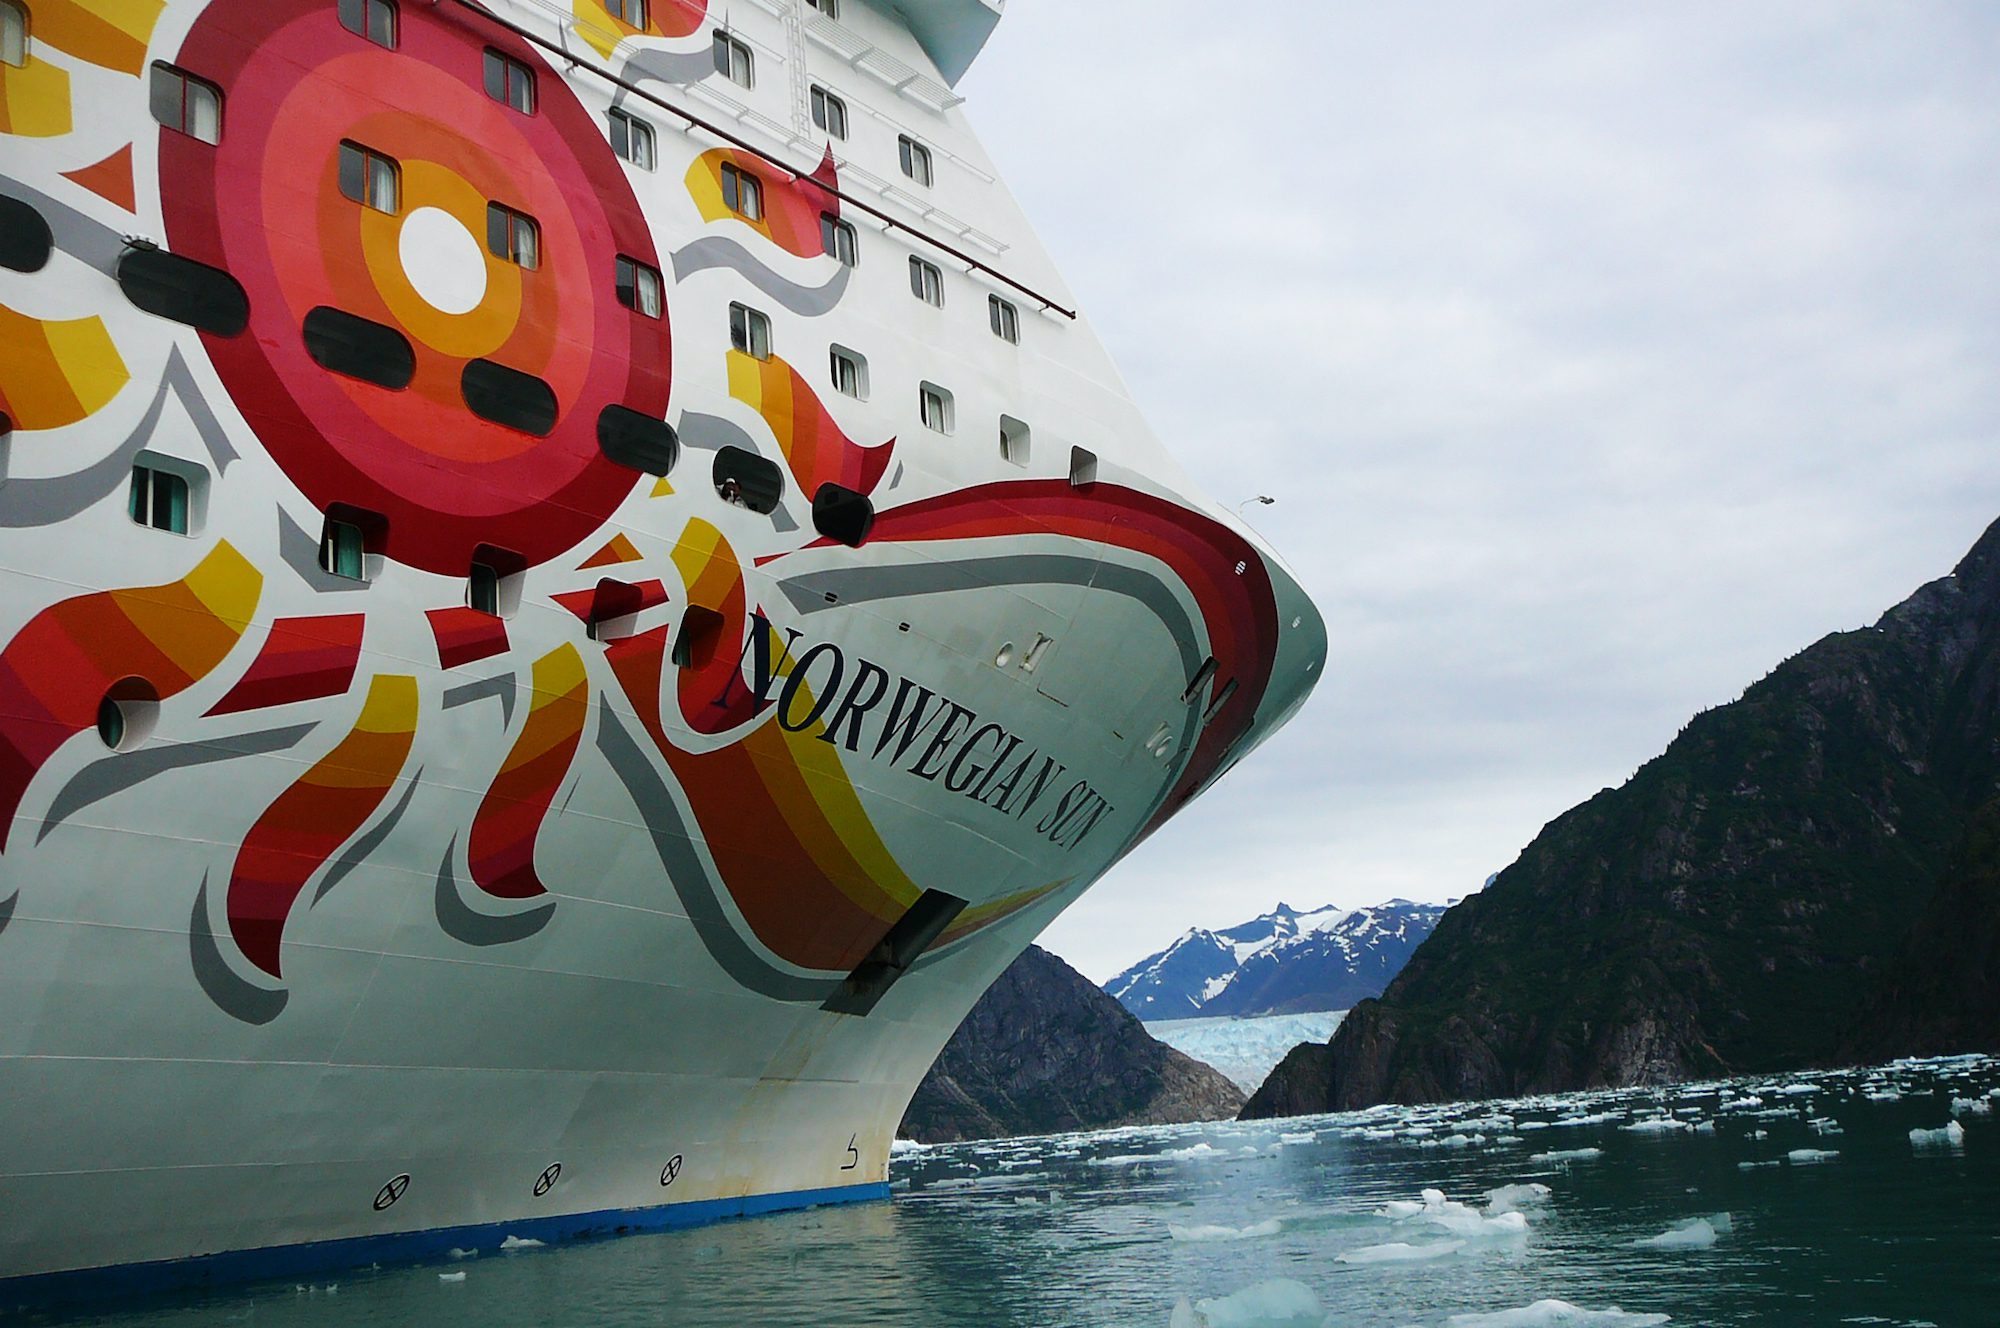 Norwegian Cruise Cut Short After Hitting Iceberg in Alaska -Incident Video